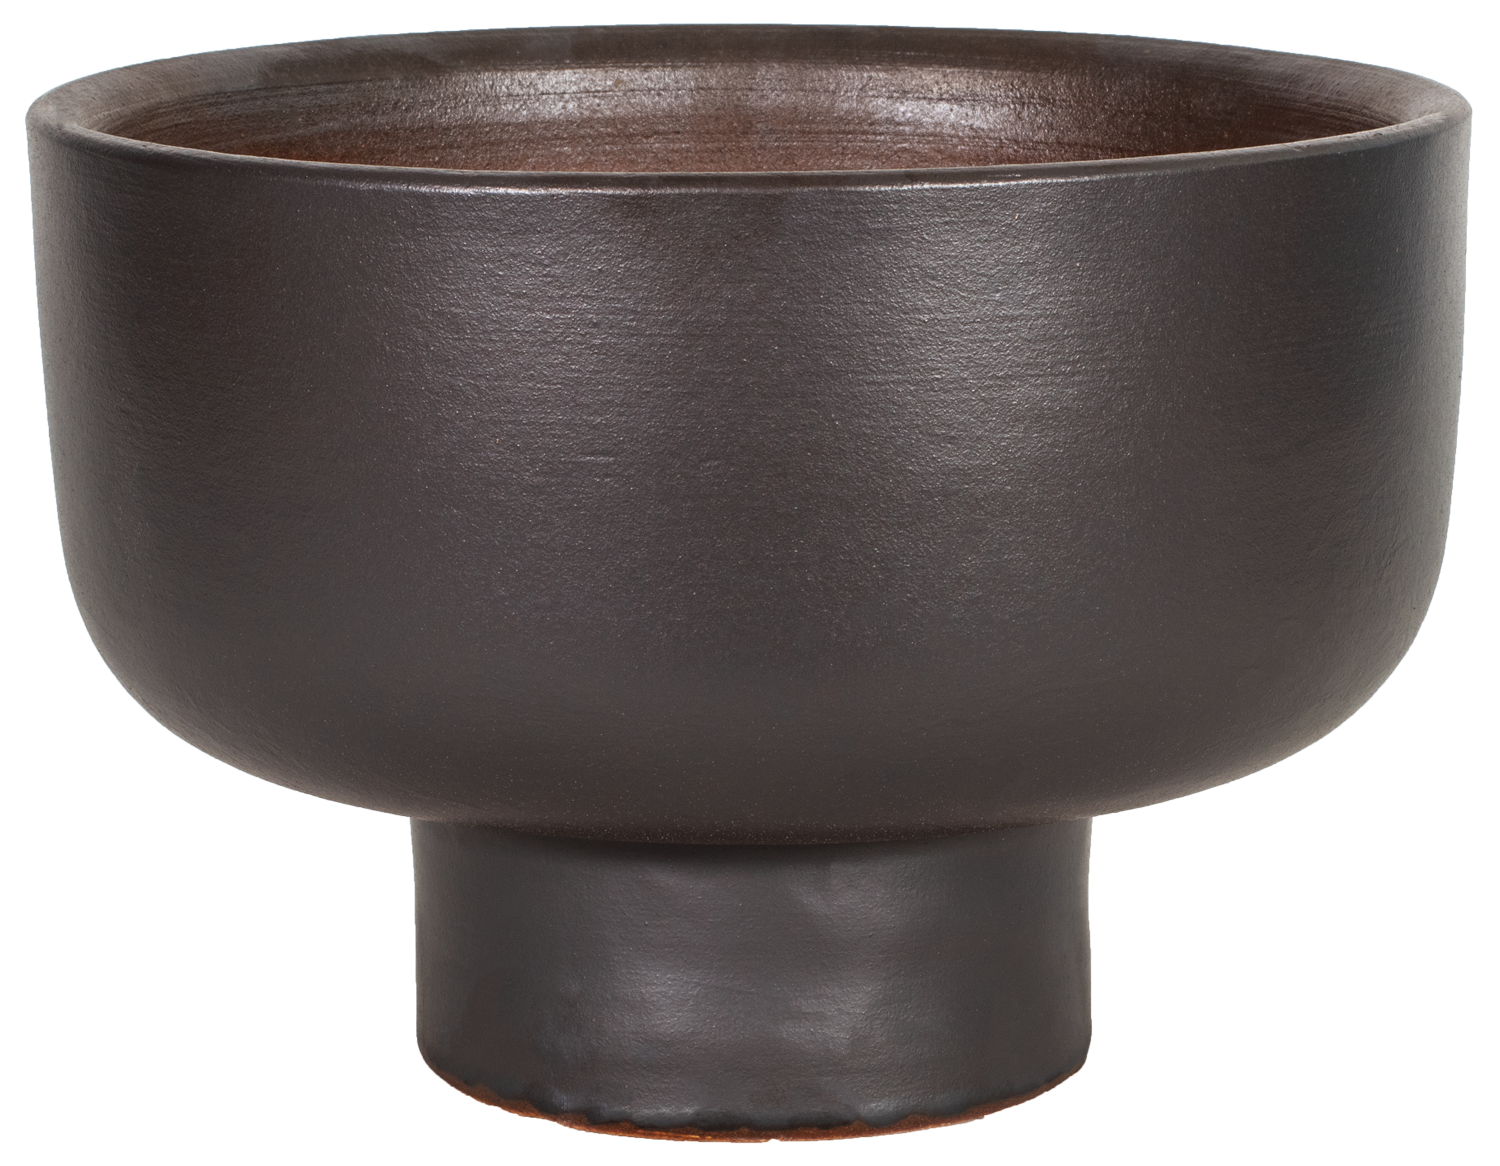 large ceramic brown planter with built in pedestal